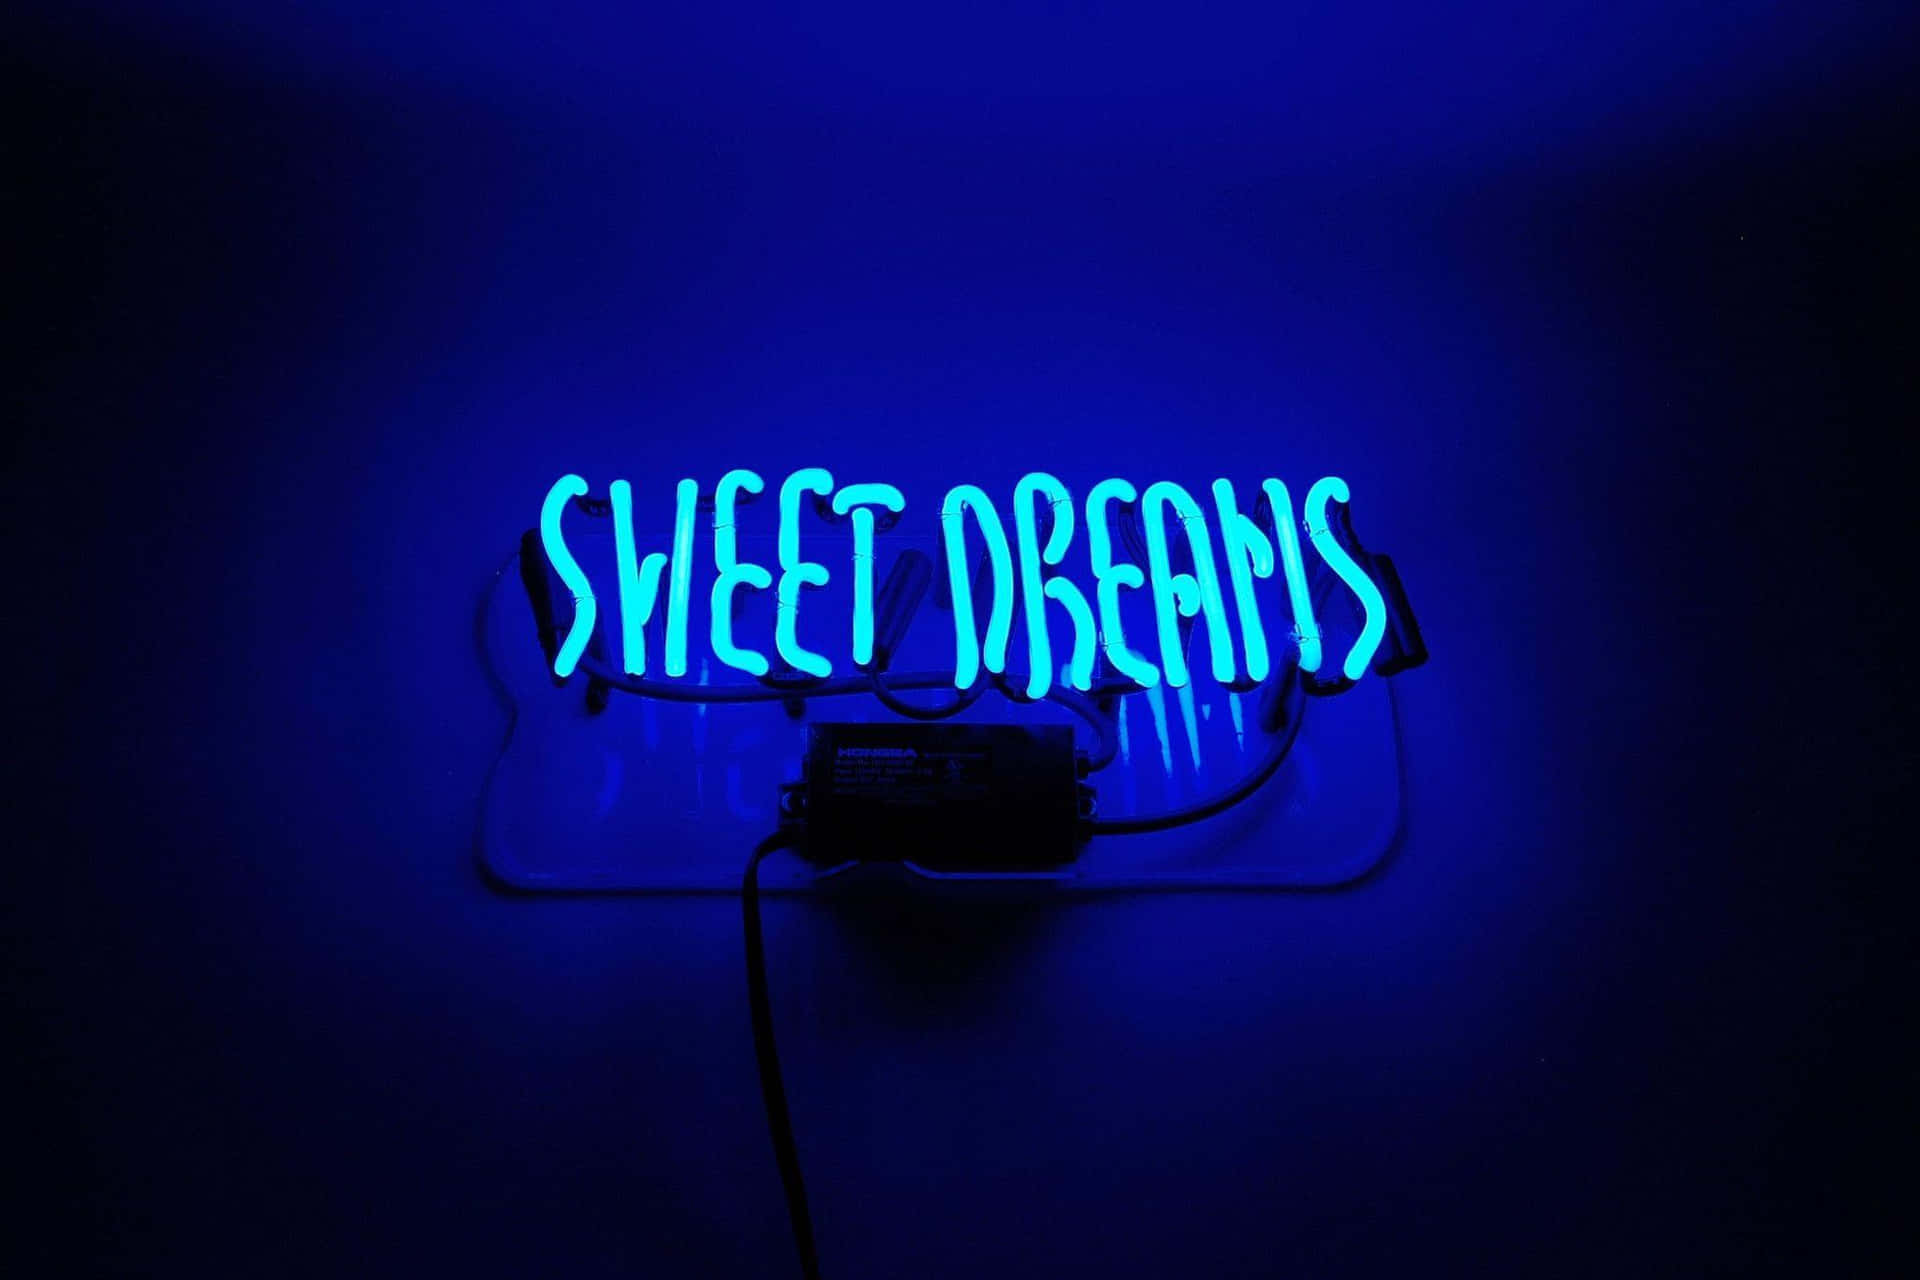 Süßeträume Neonlichter Tumblr Laptop Wallpaper